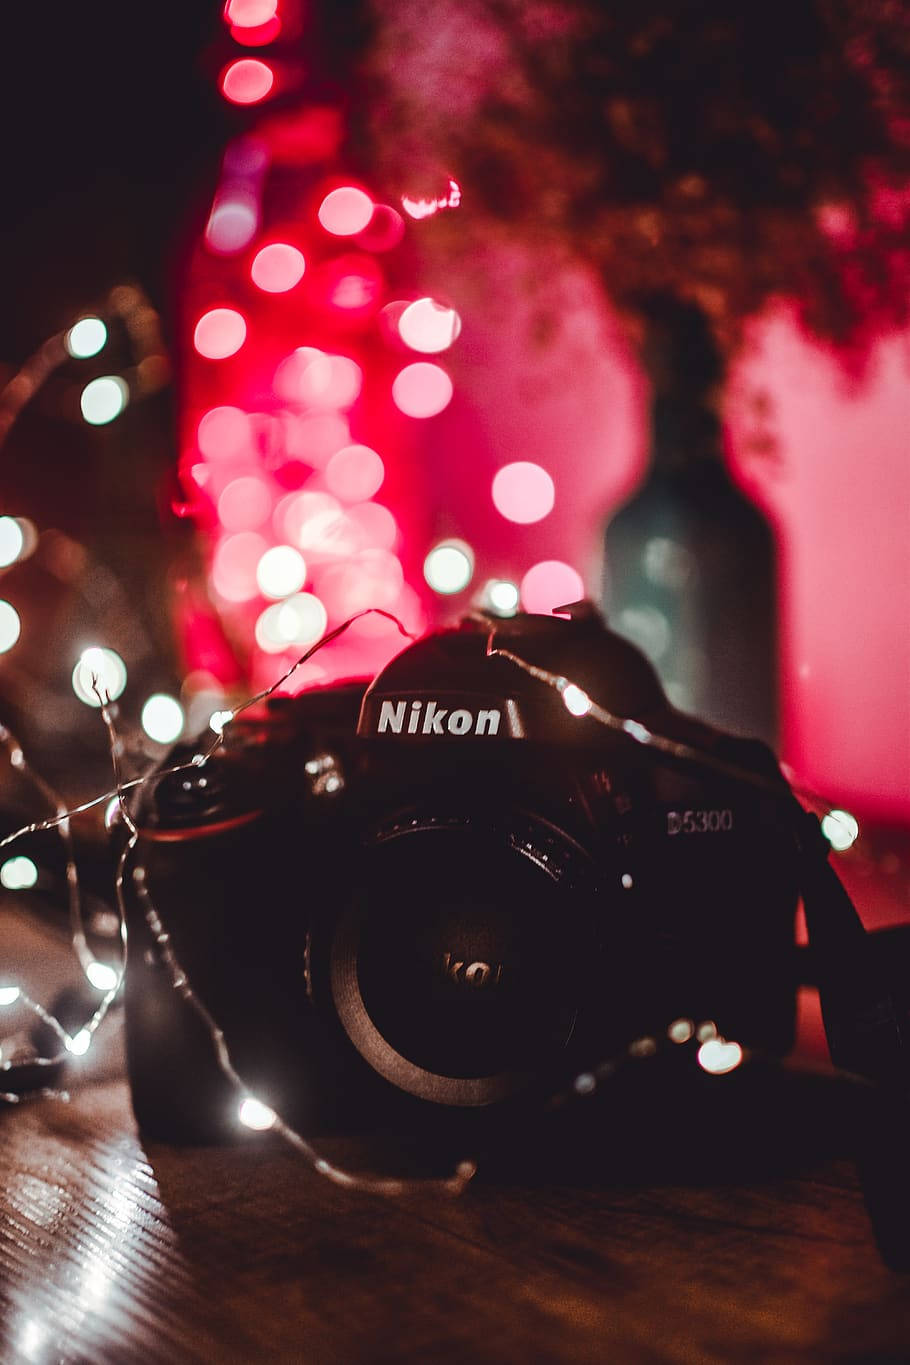 Dslr Blur Nikon Camera Background